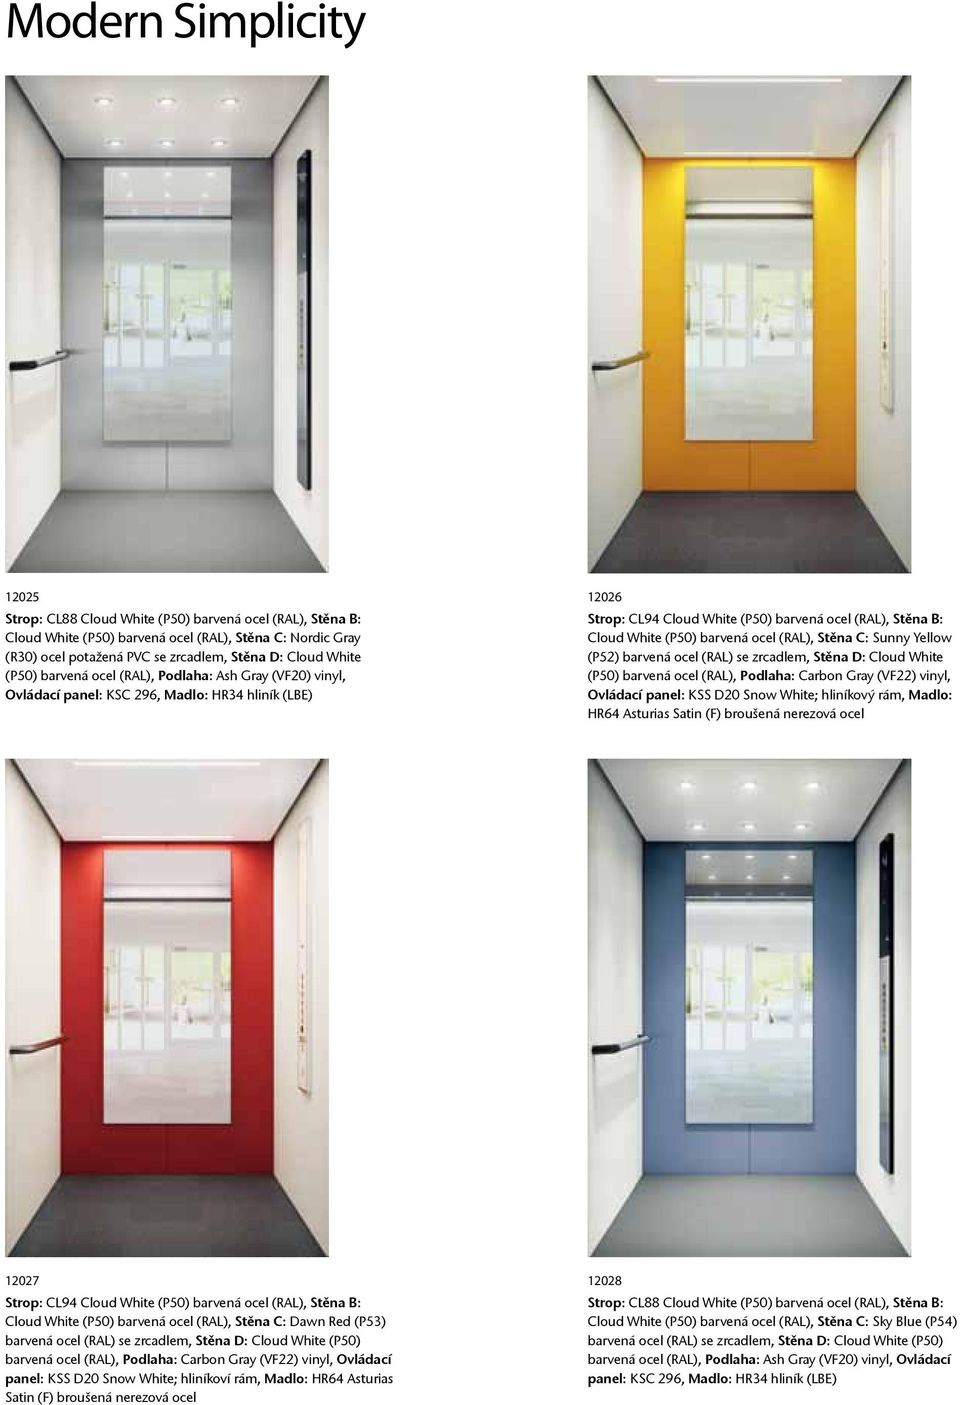 ocel (RAL), Stěna C: Sunny Yellow (P52) barvená ocel (RAL) se zrcadlem, Stěna D: Cloud White (P50) barvená ocel (RAL), Podlaha: Carbon Gray (VF22) vinyl, Ovládací panel: KSS D20 Snow White; hliníkový